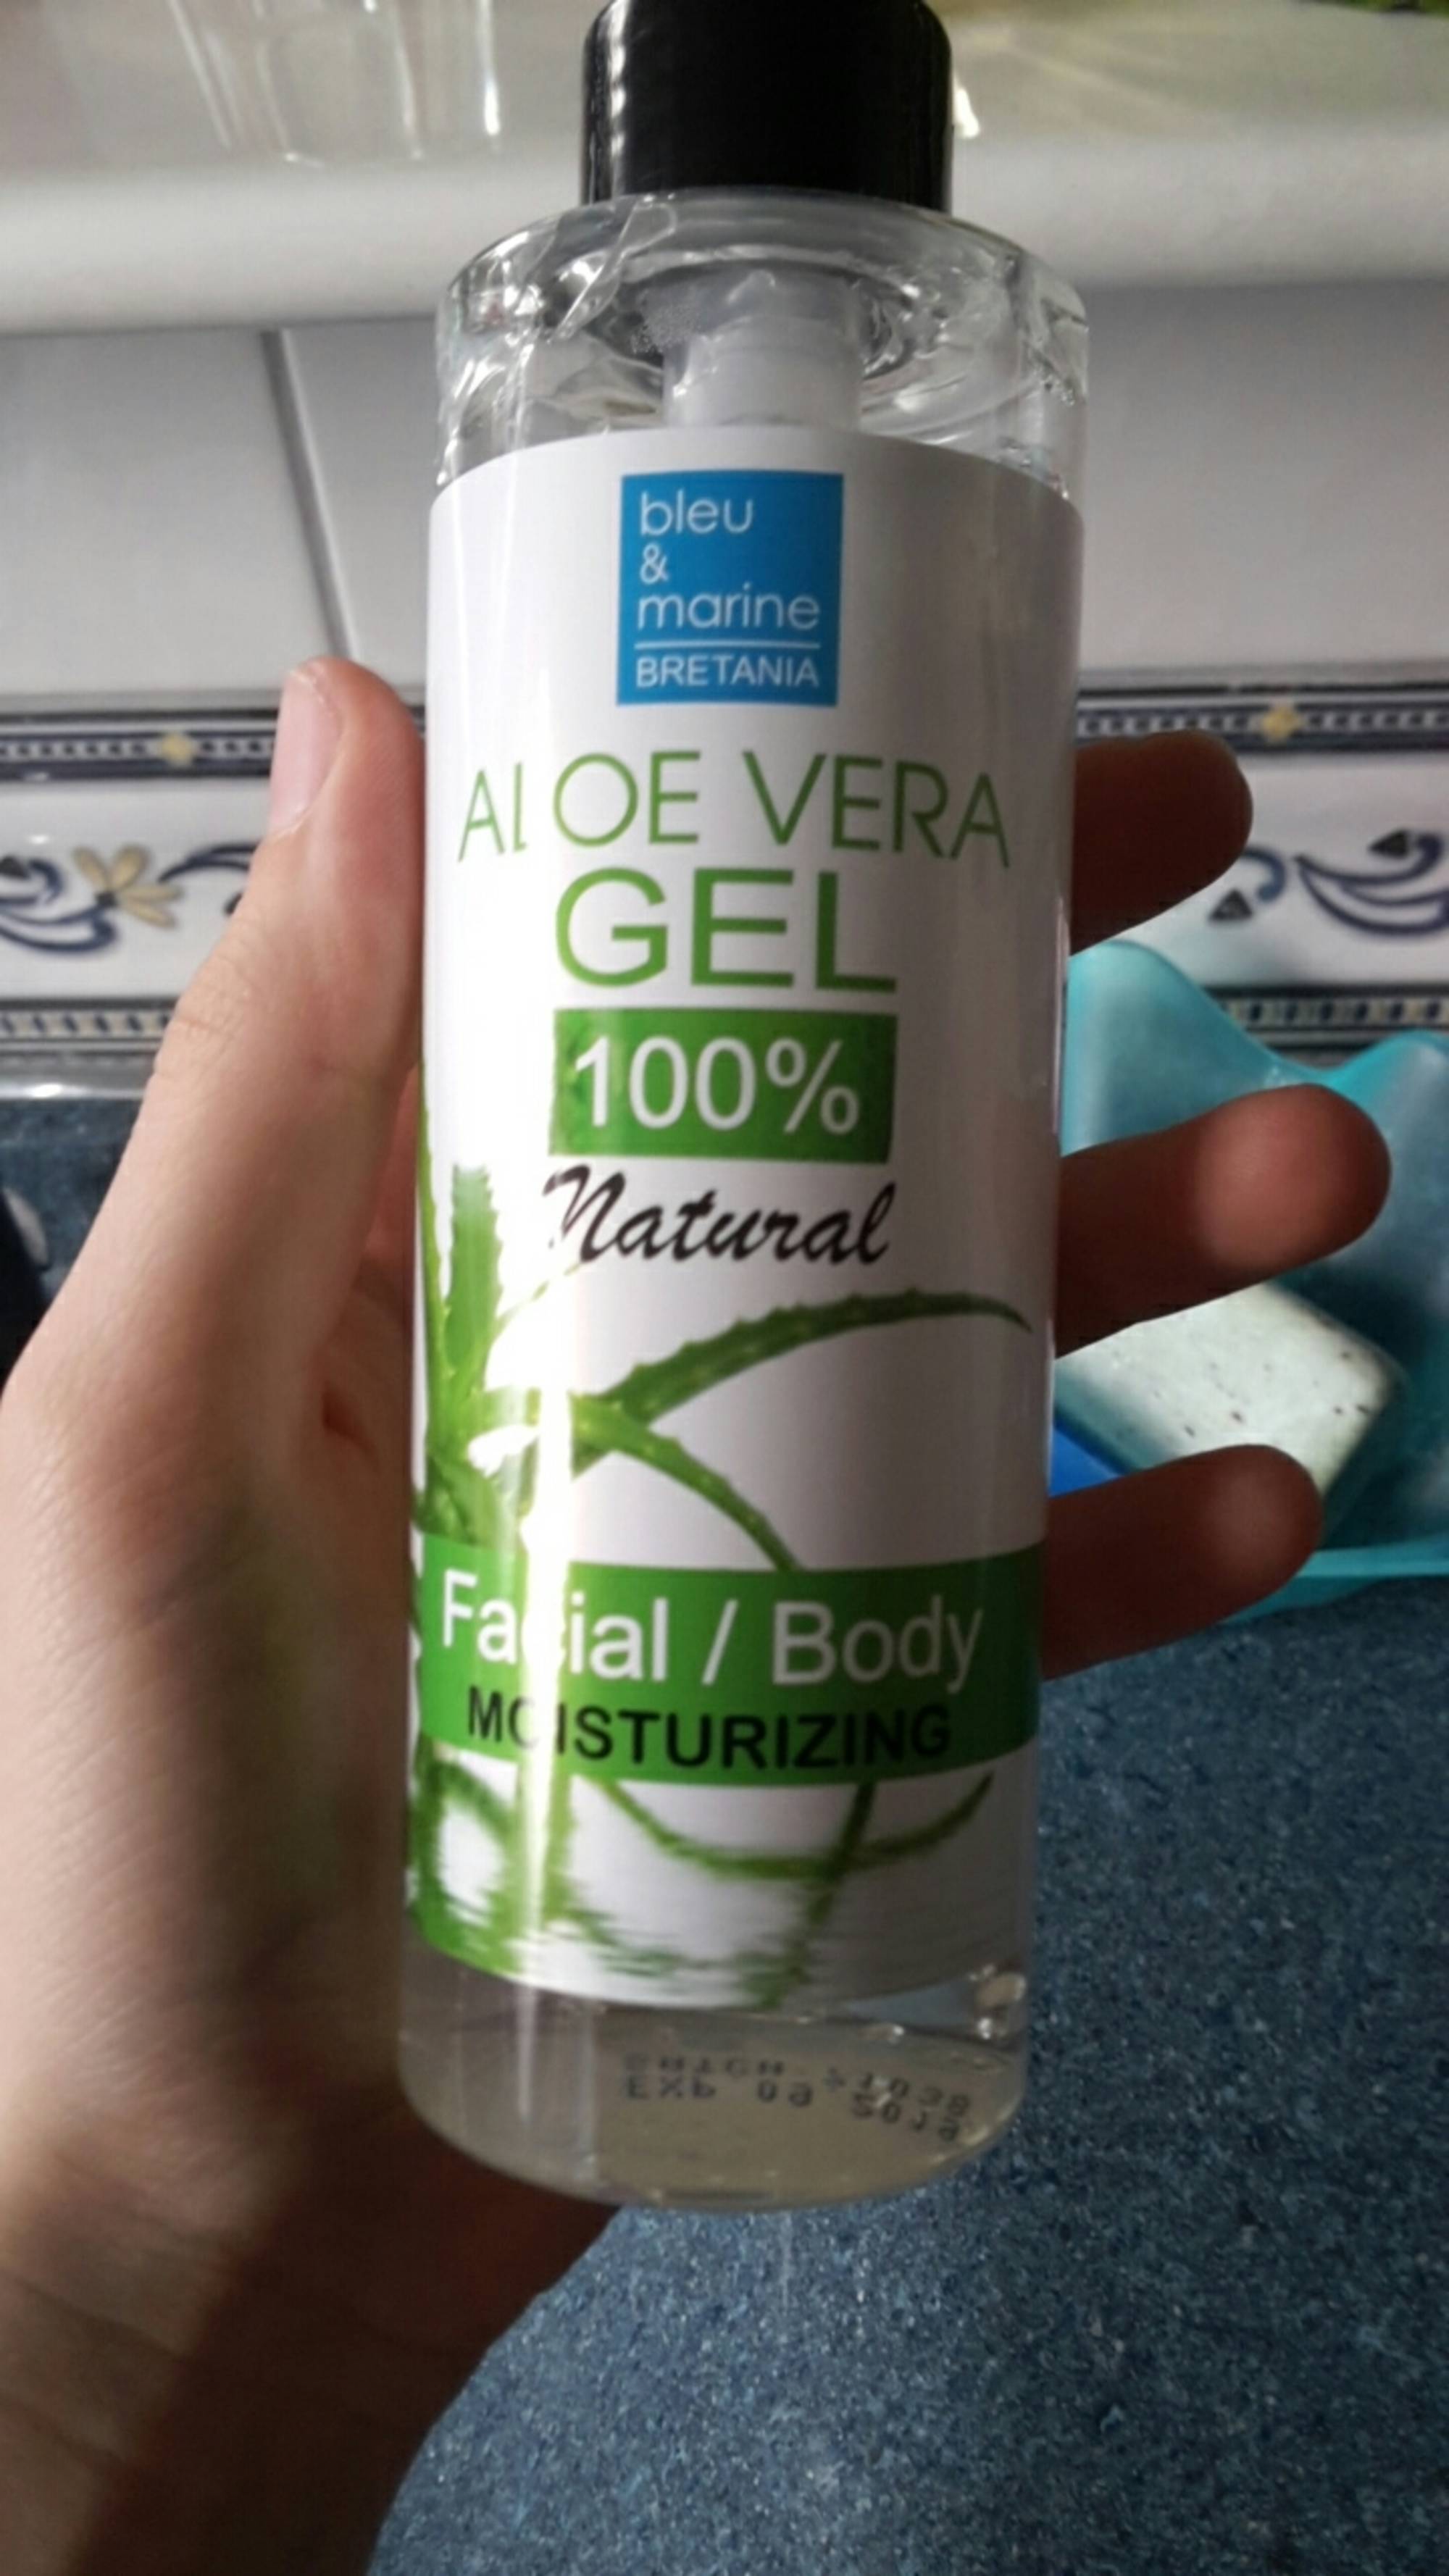 BLEU & MARINE BRETANIA - Aloe vera gel 100% natural